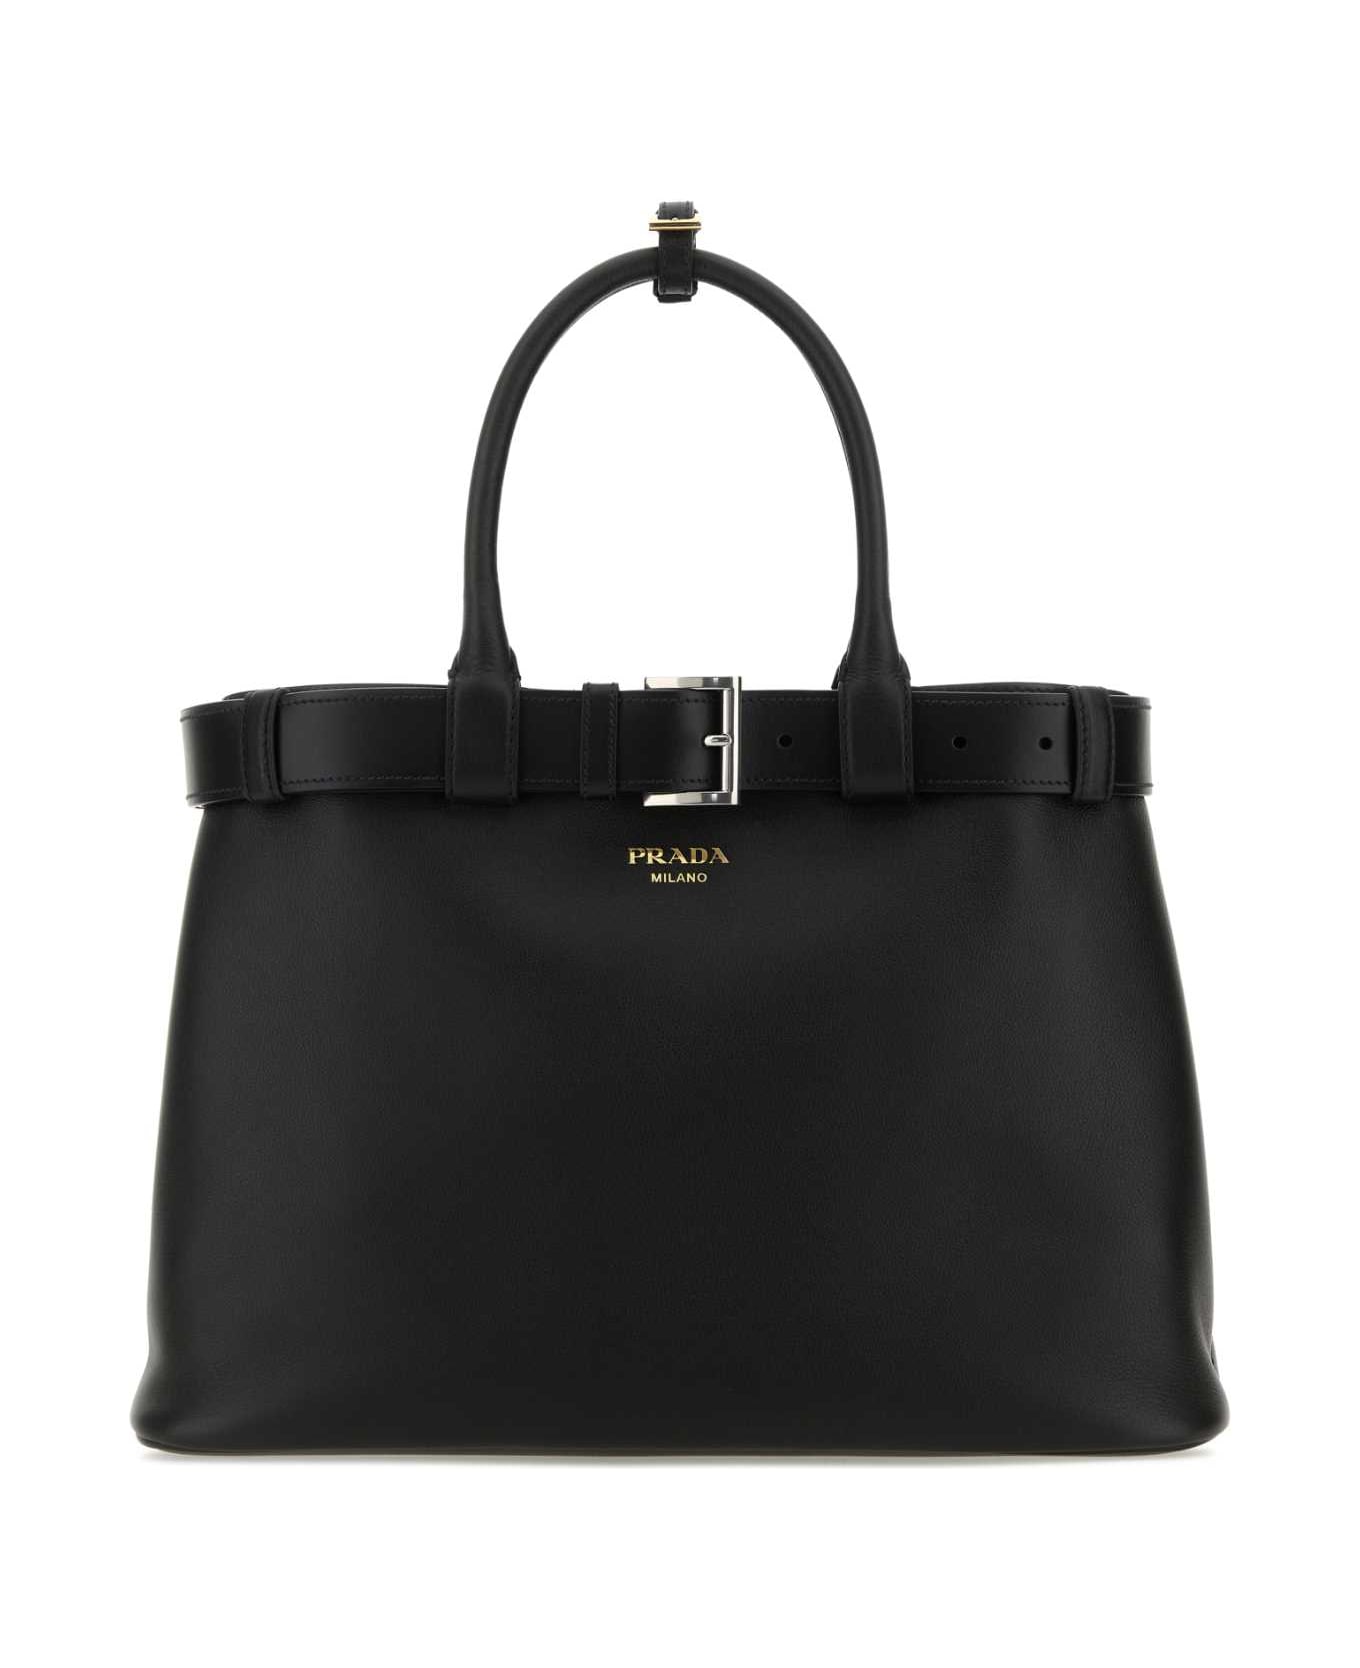 Prada Black Leather Prada Buckle Large Handbag - NERO トートバッグ